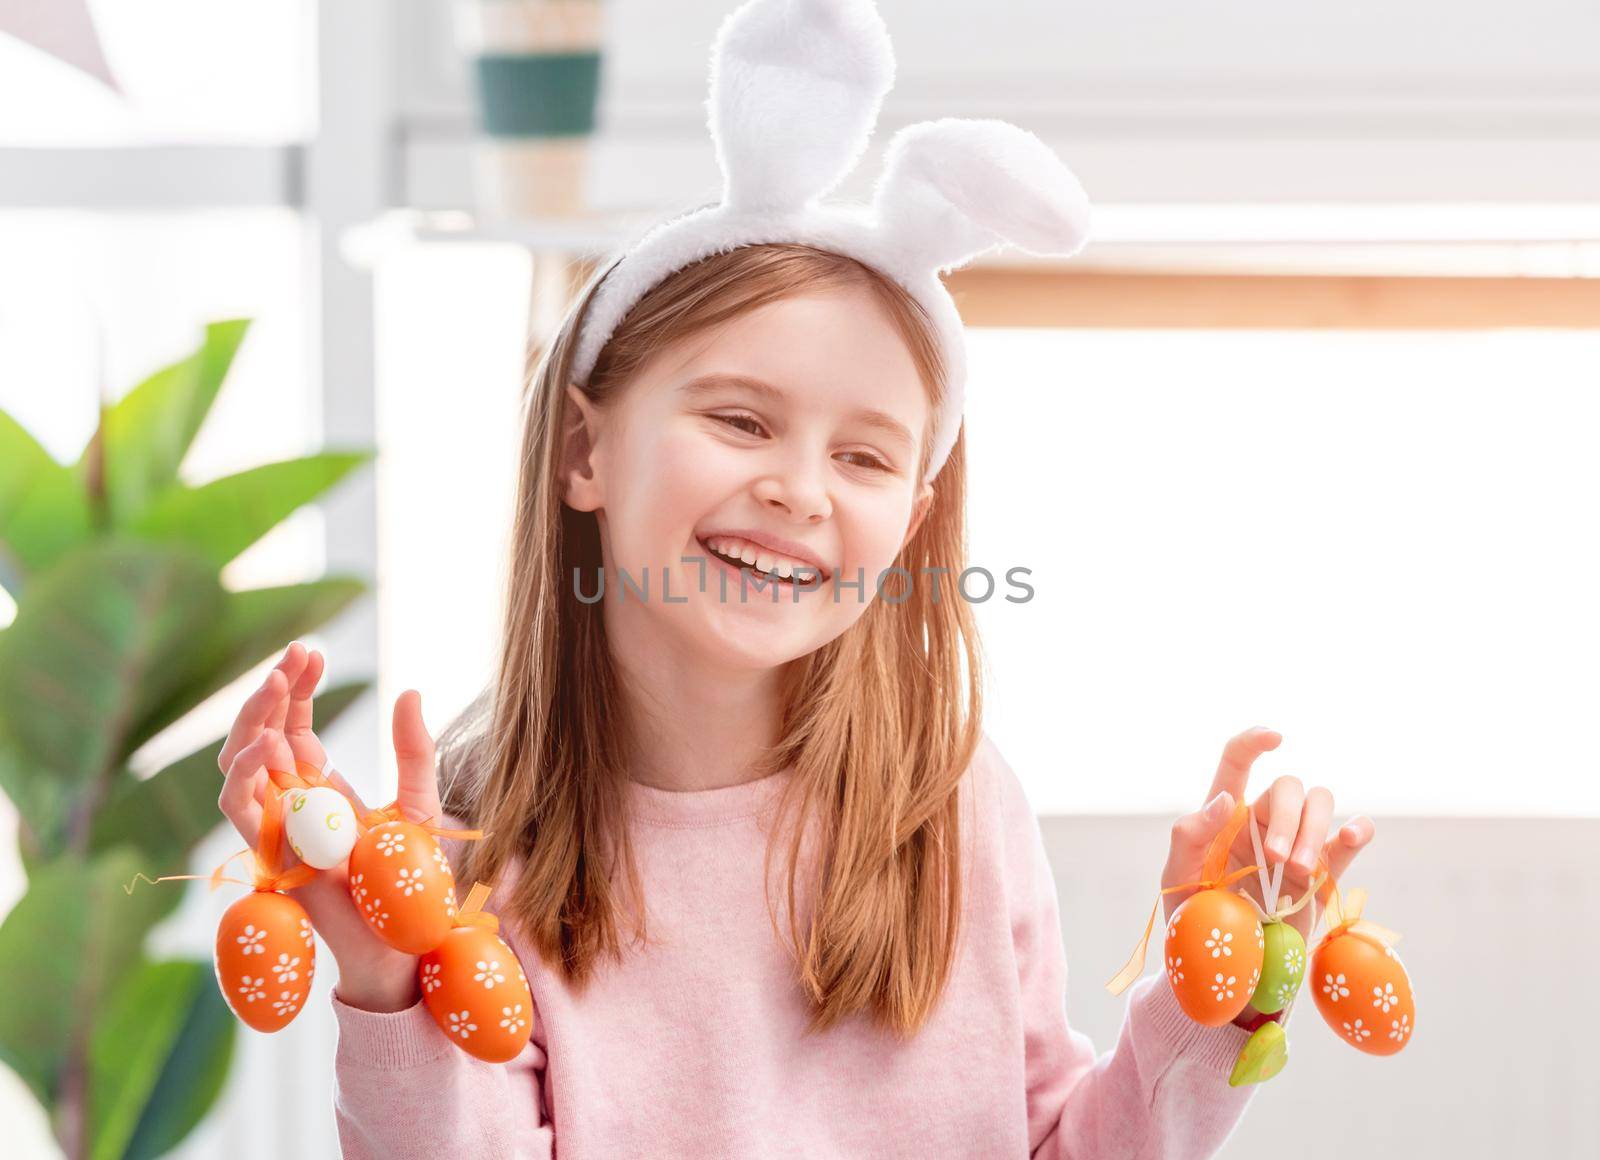 Little girl at Easter day by tan4ikk1